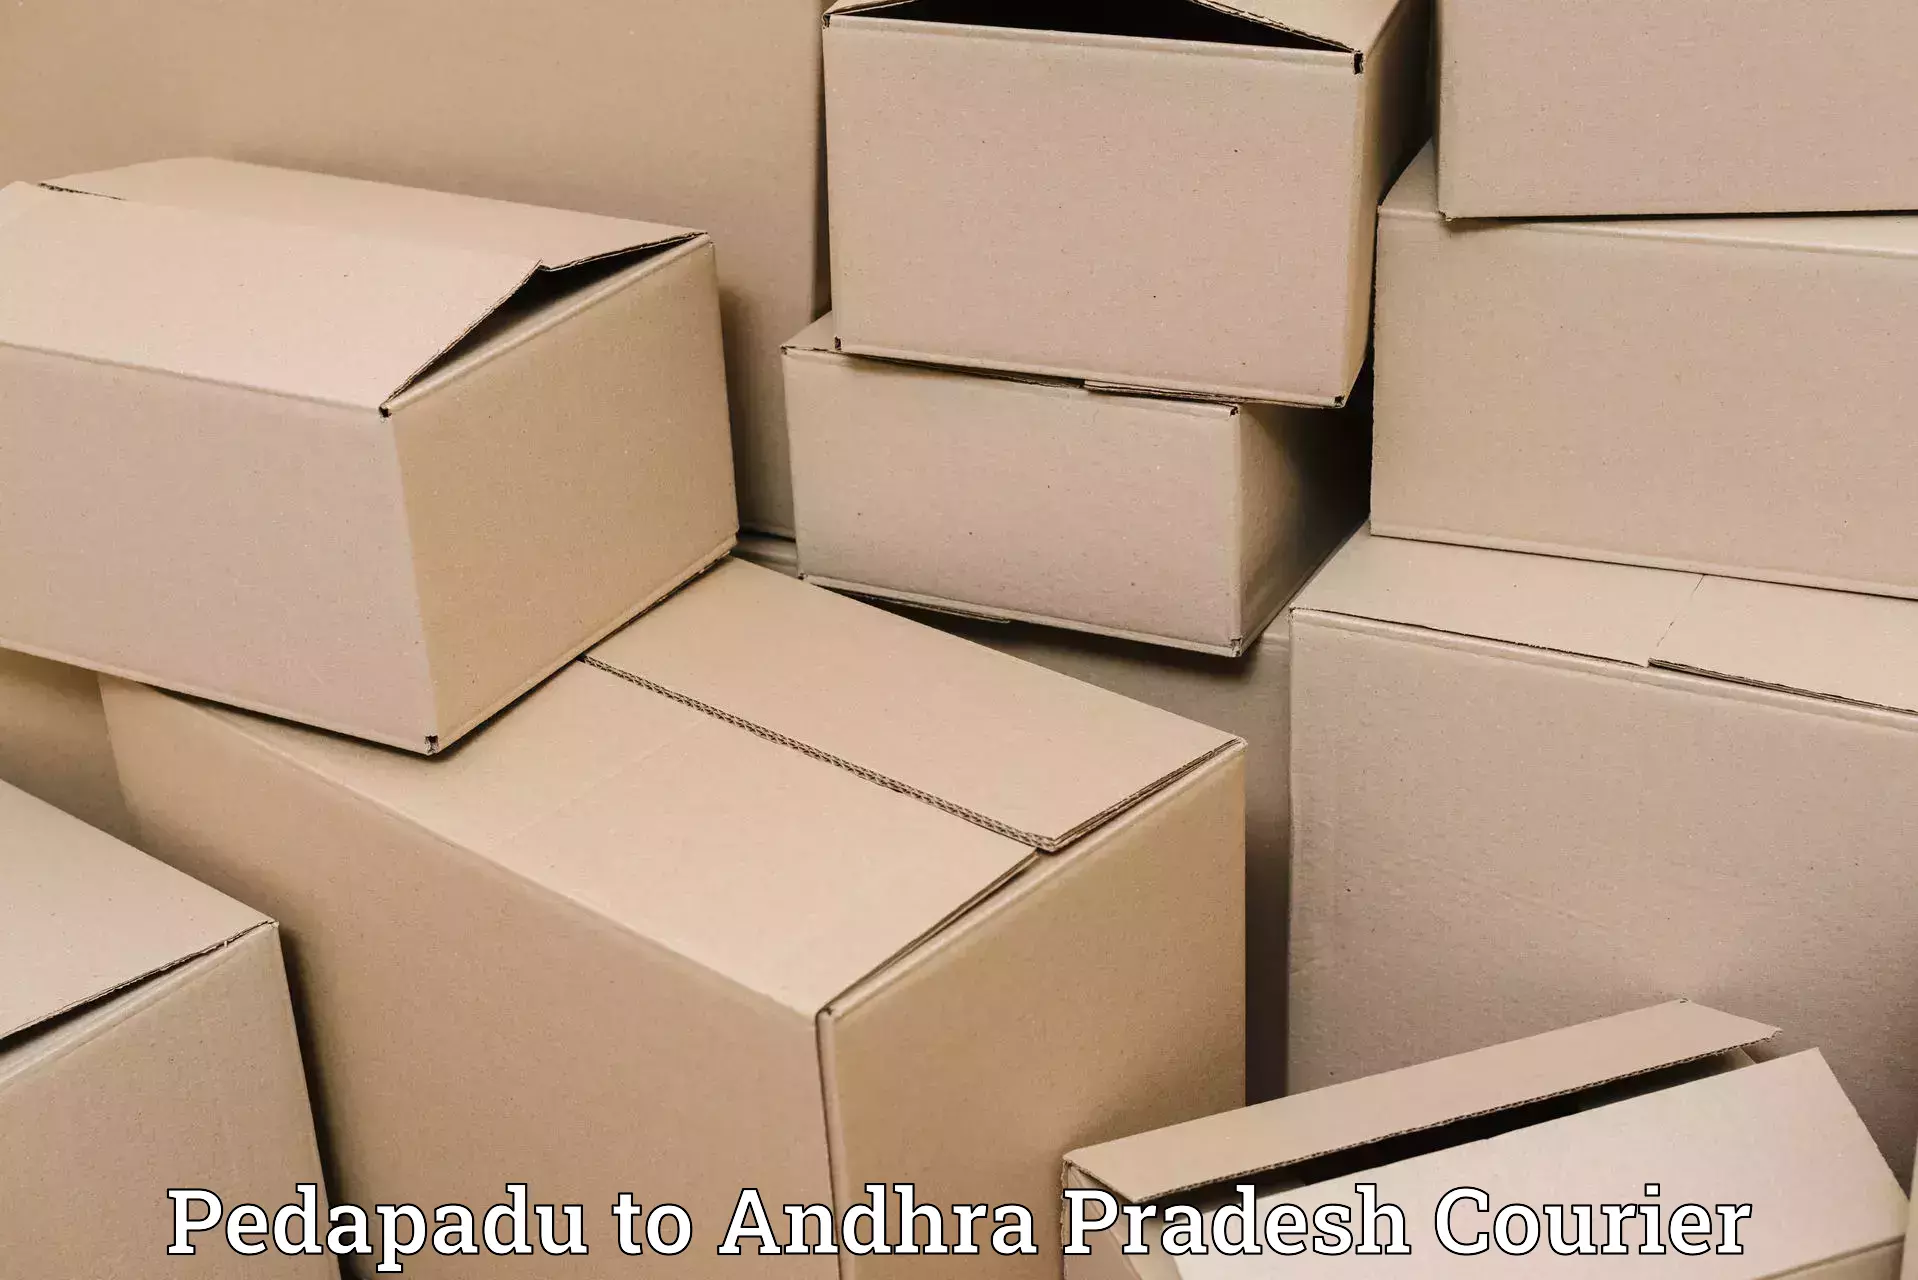 Sustainable shipping practices Pedapadu to Andhra Pradesh